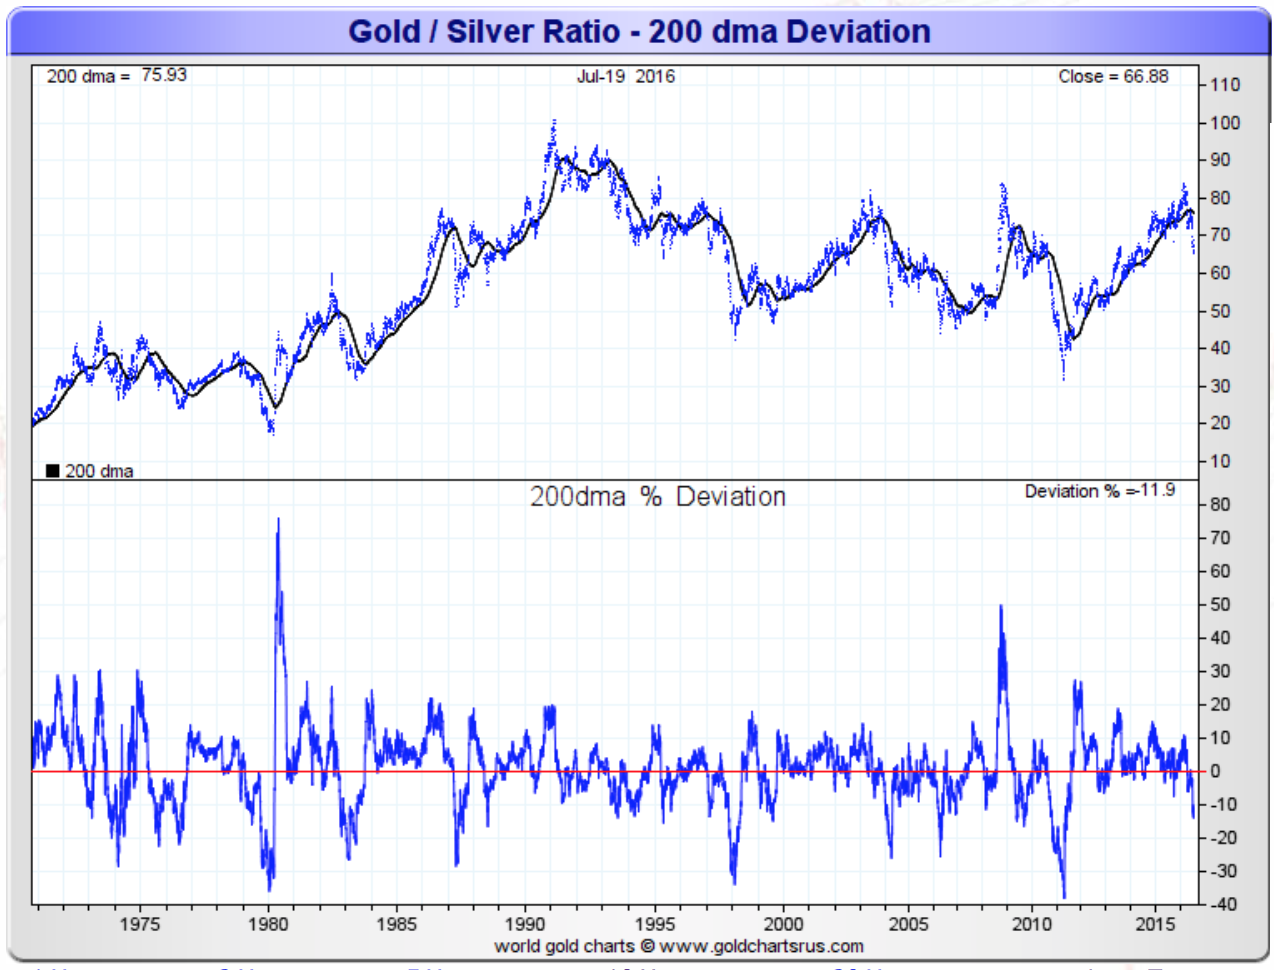 Gold/Silver ratio - 200 dma deviation